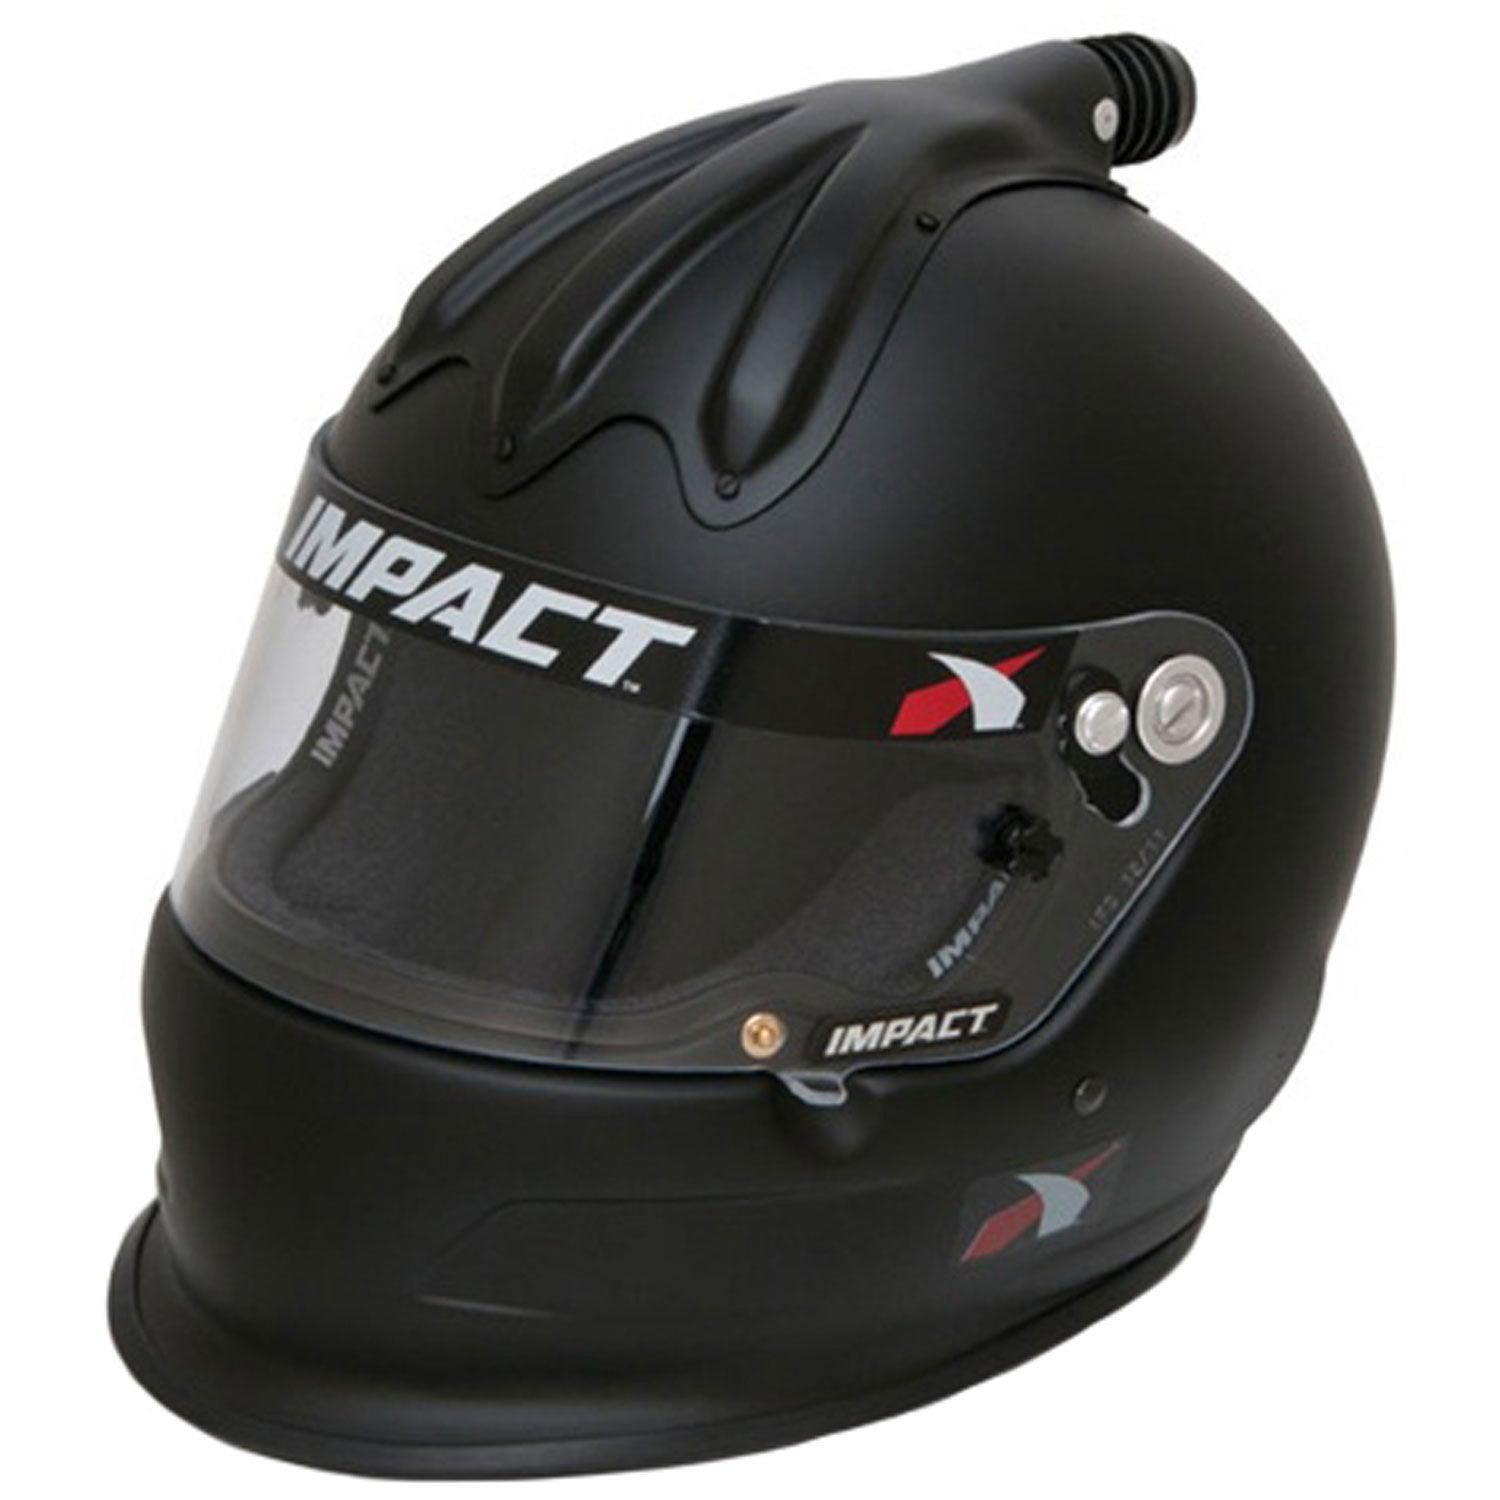 Helmet Super Charger Large Flat Black SA2020 - Burlile Performance Products